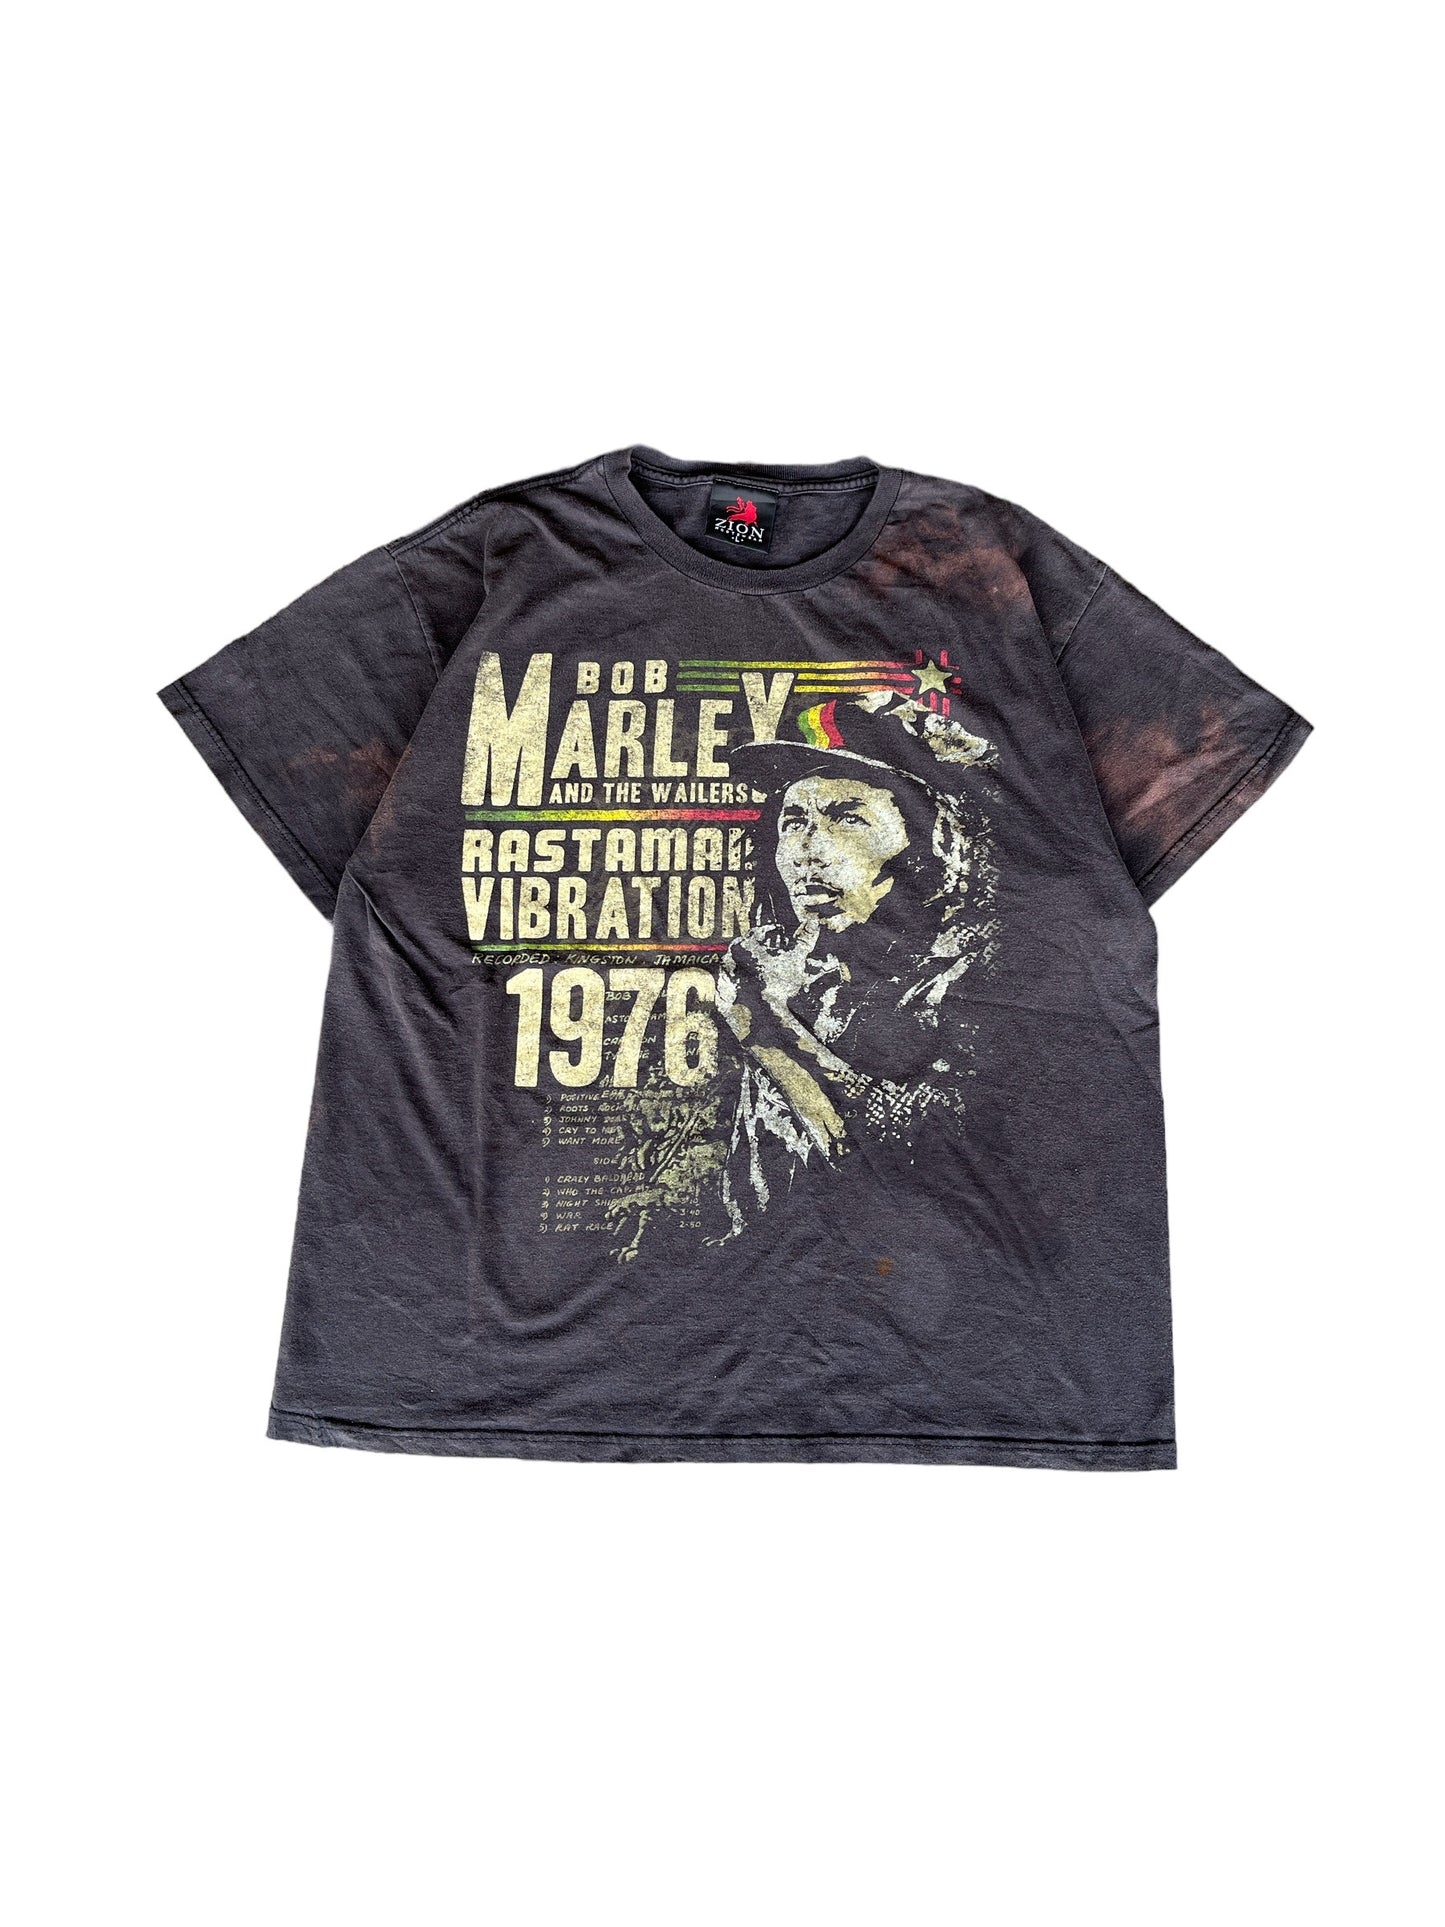 Vintage Bob Marley "Rastaman Vibration" Tee